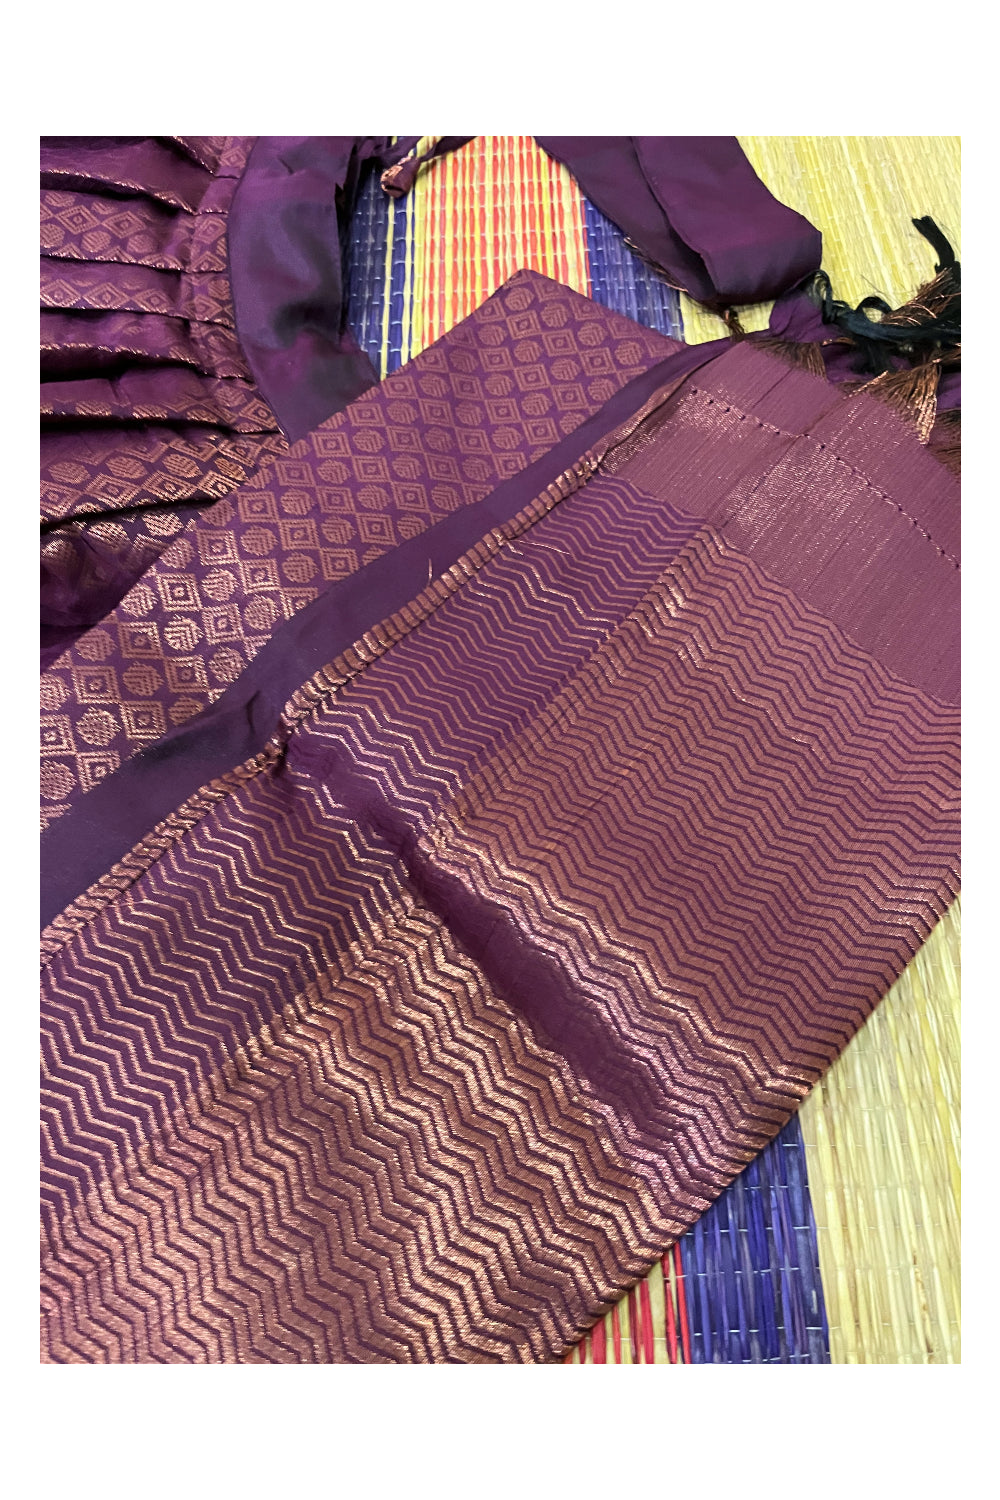 Southloom Semi Stitched Semi Silk Dark Magenta Dhavani Set include Neriyathu and Blouse Piece